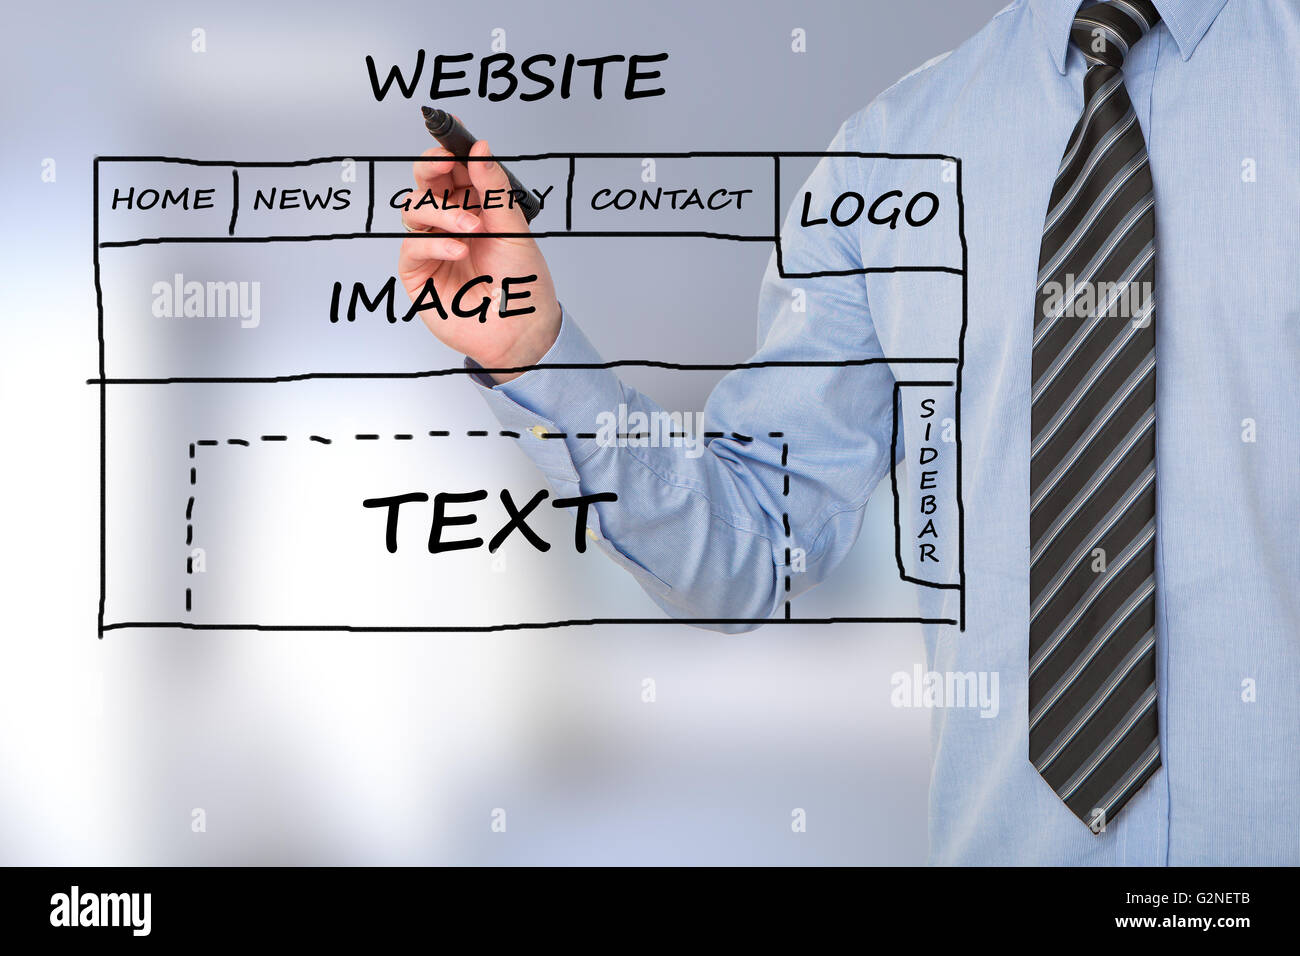 web development design designer seo content - stock image Stock Photo